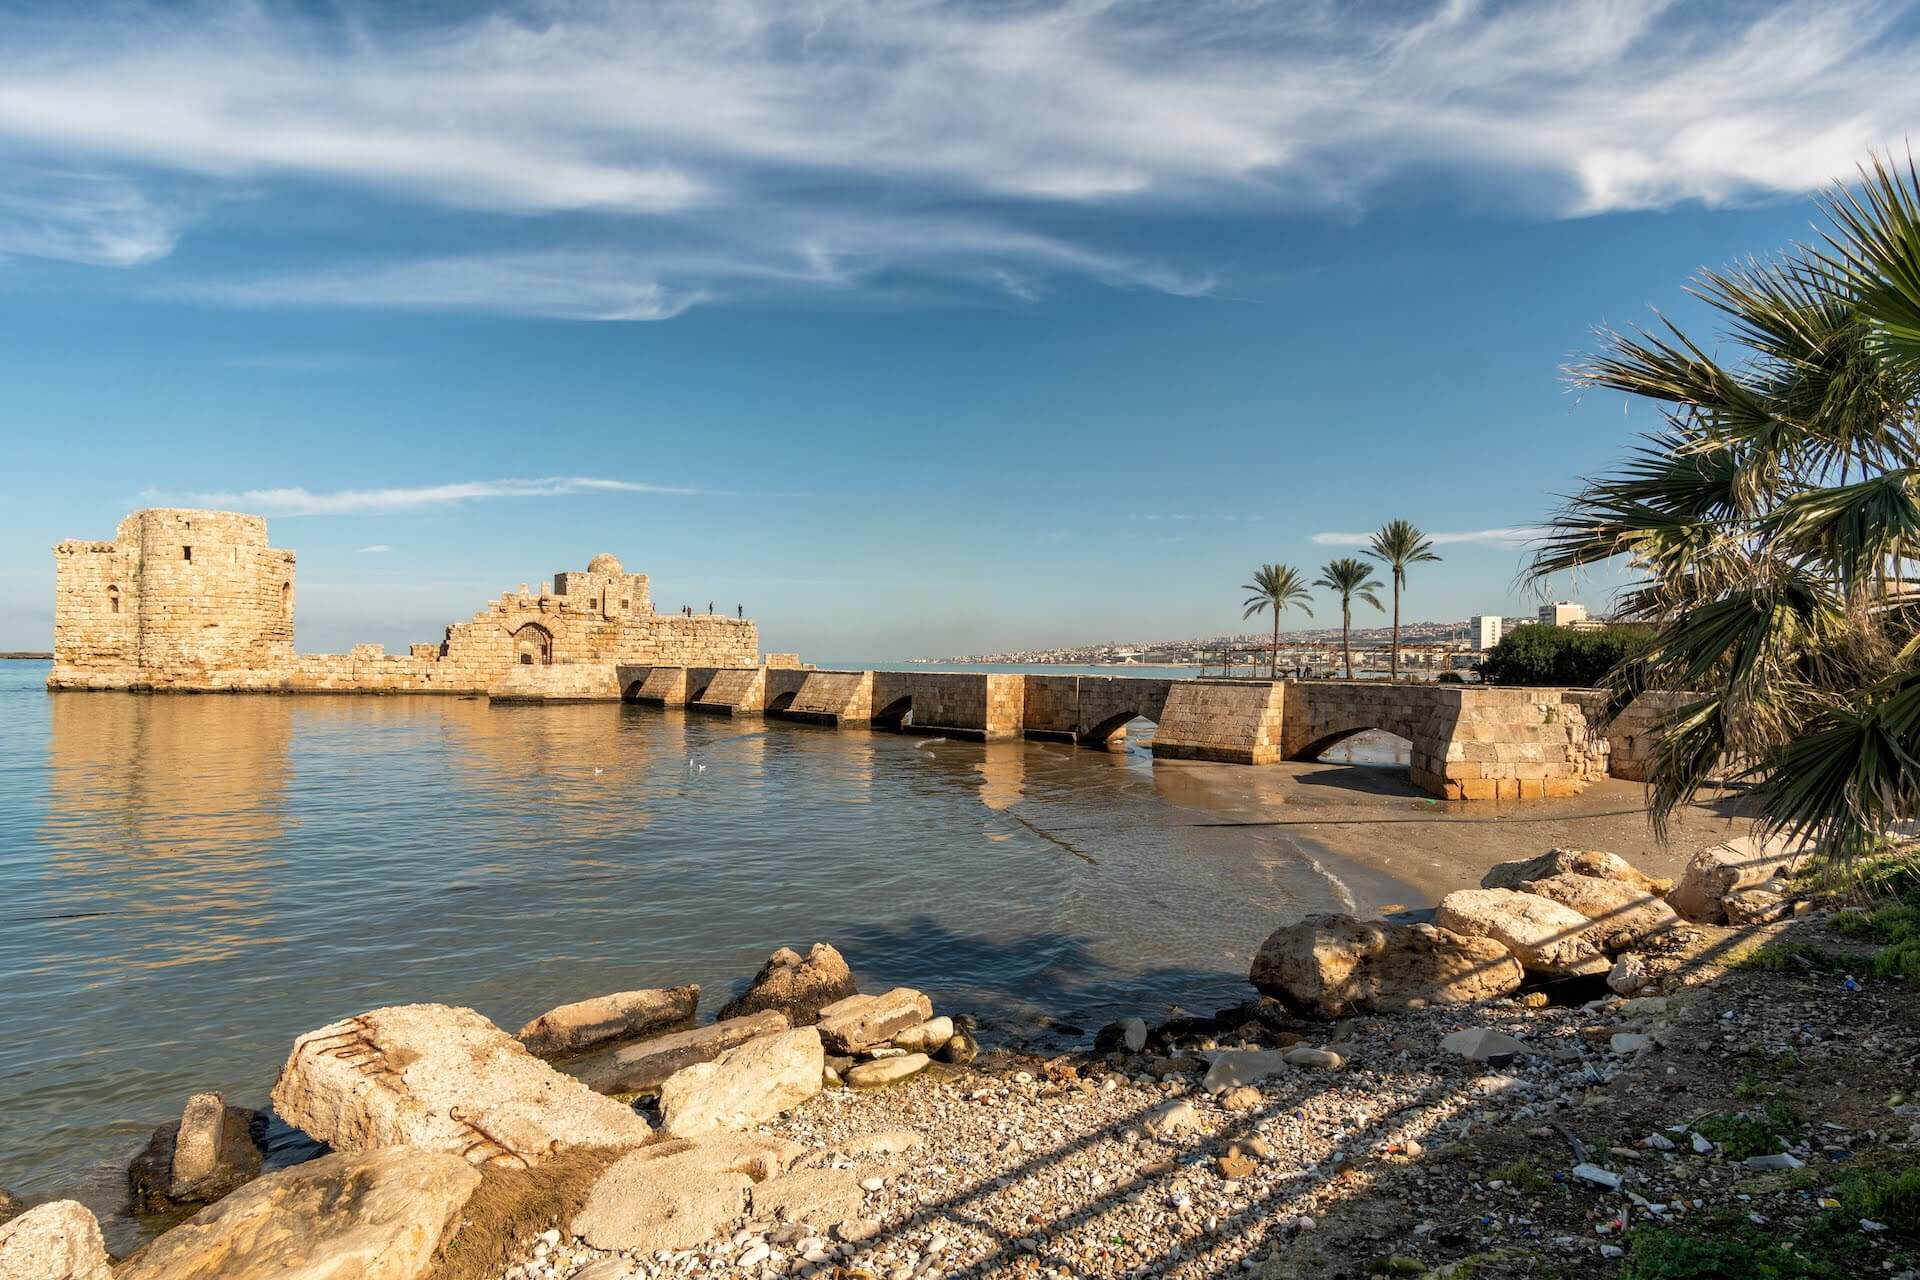 Kruisvaarders kasteel in het water voor Sidon